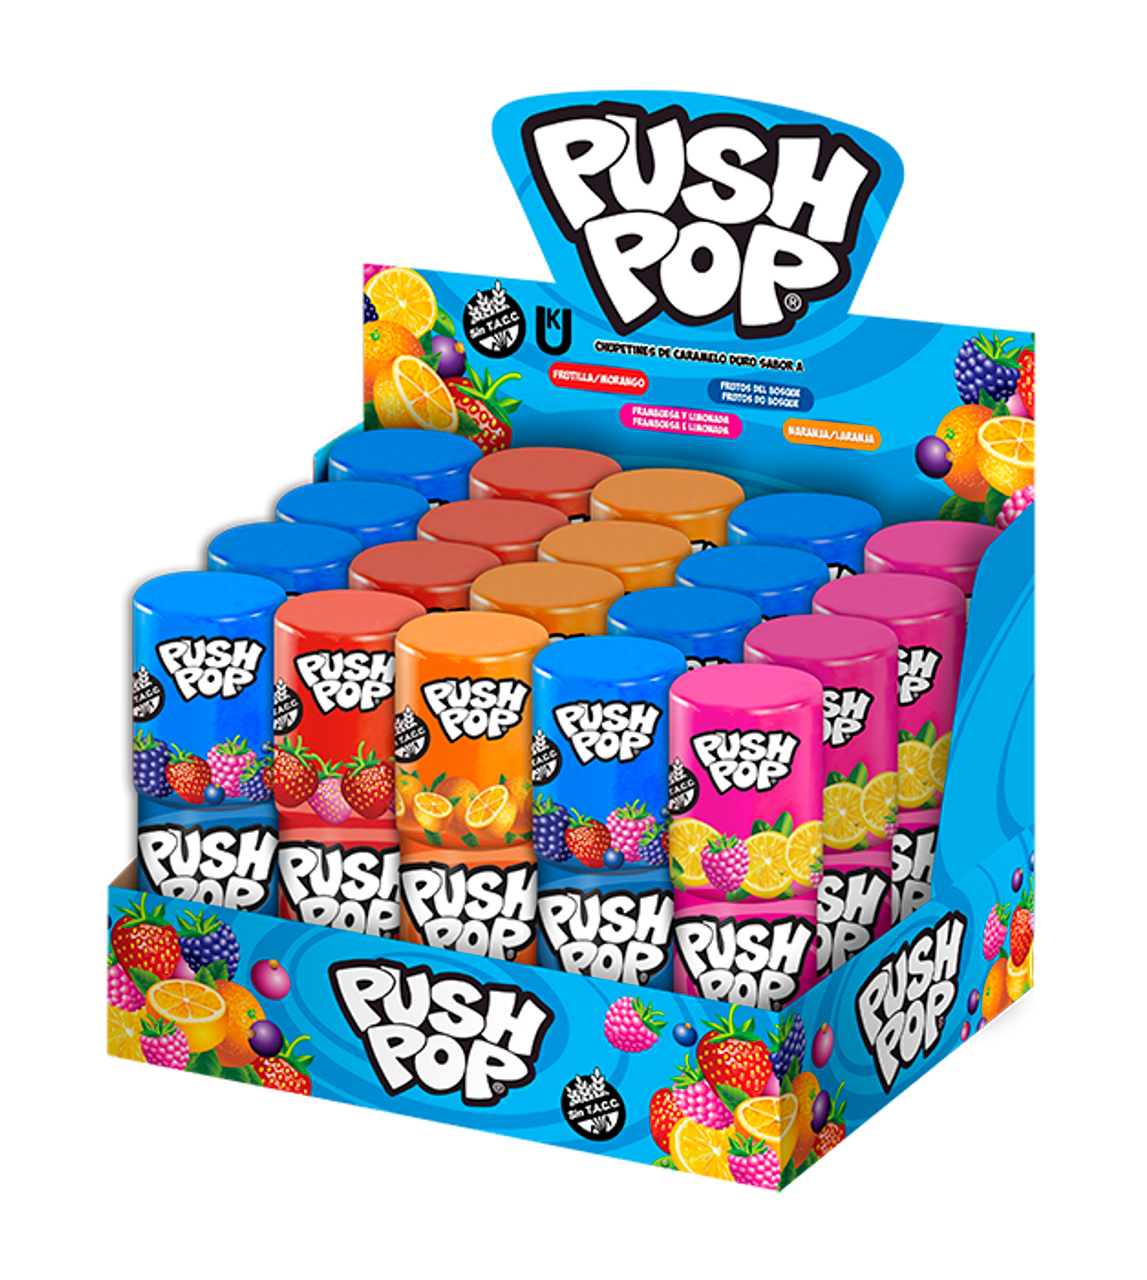 Push Pop Chupetines Hard Lollipops Assorted Flavors 300 / 10.58 oz (box of 20 units)